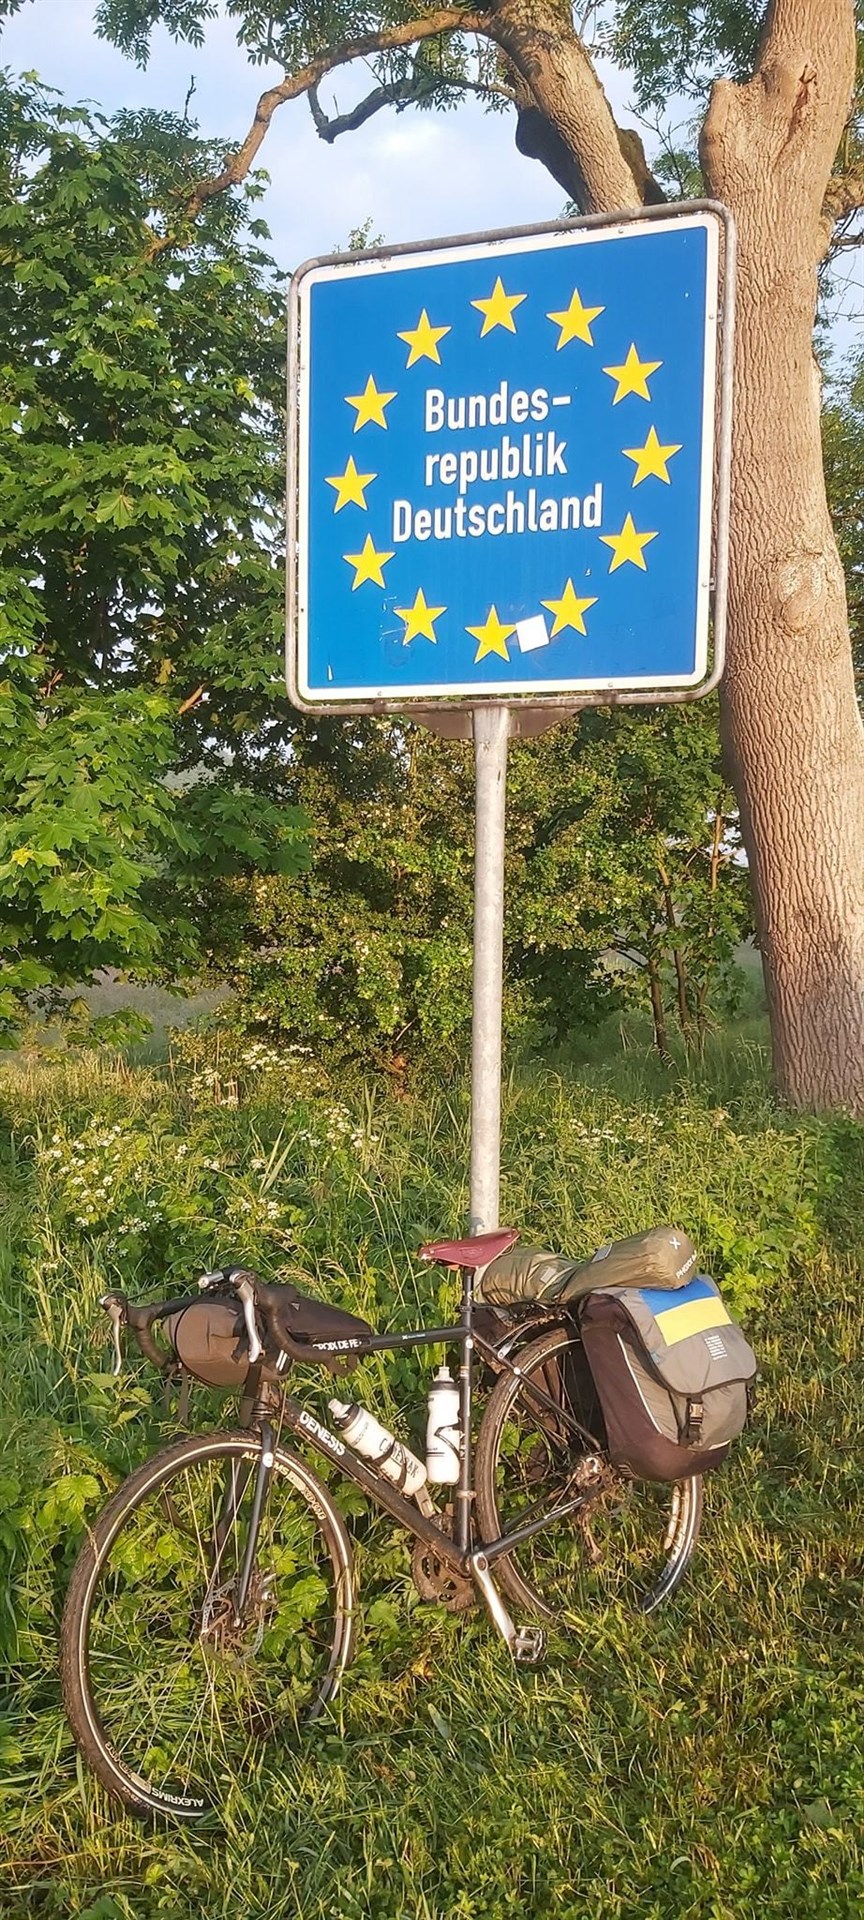 The Polish/German border.